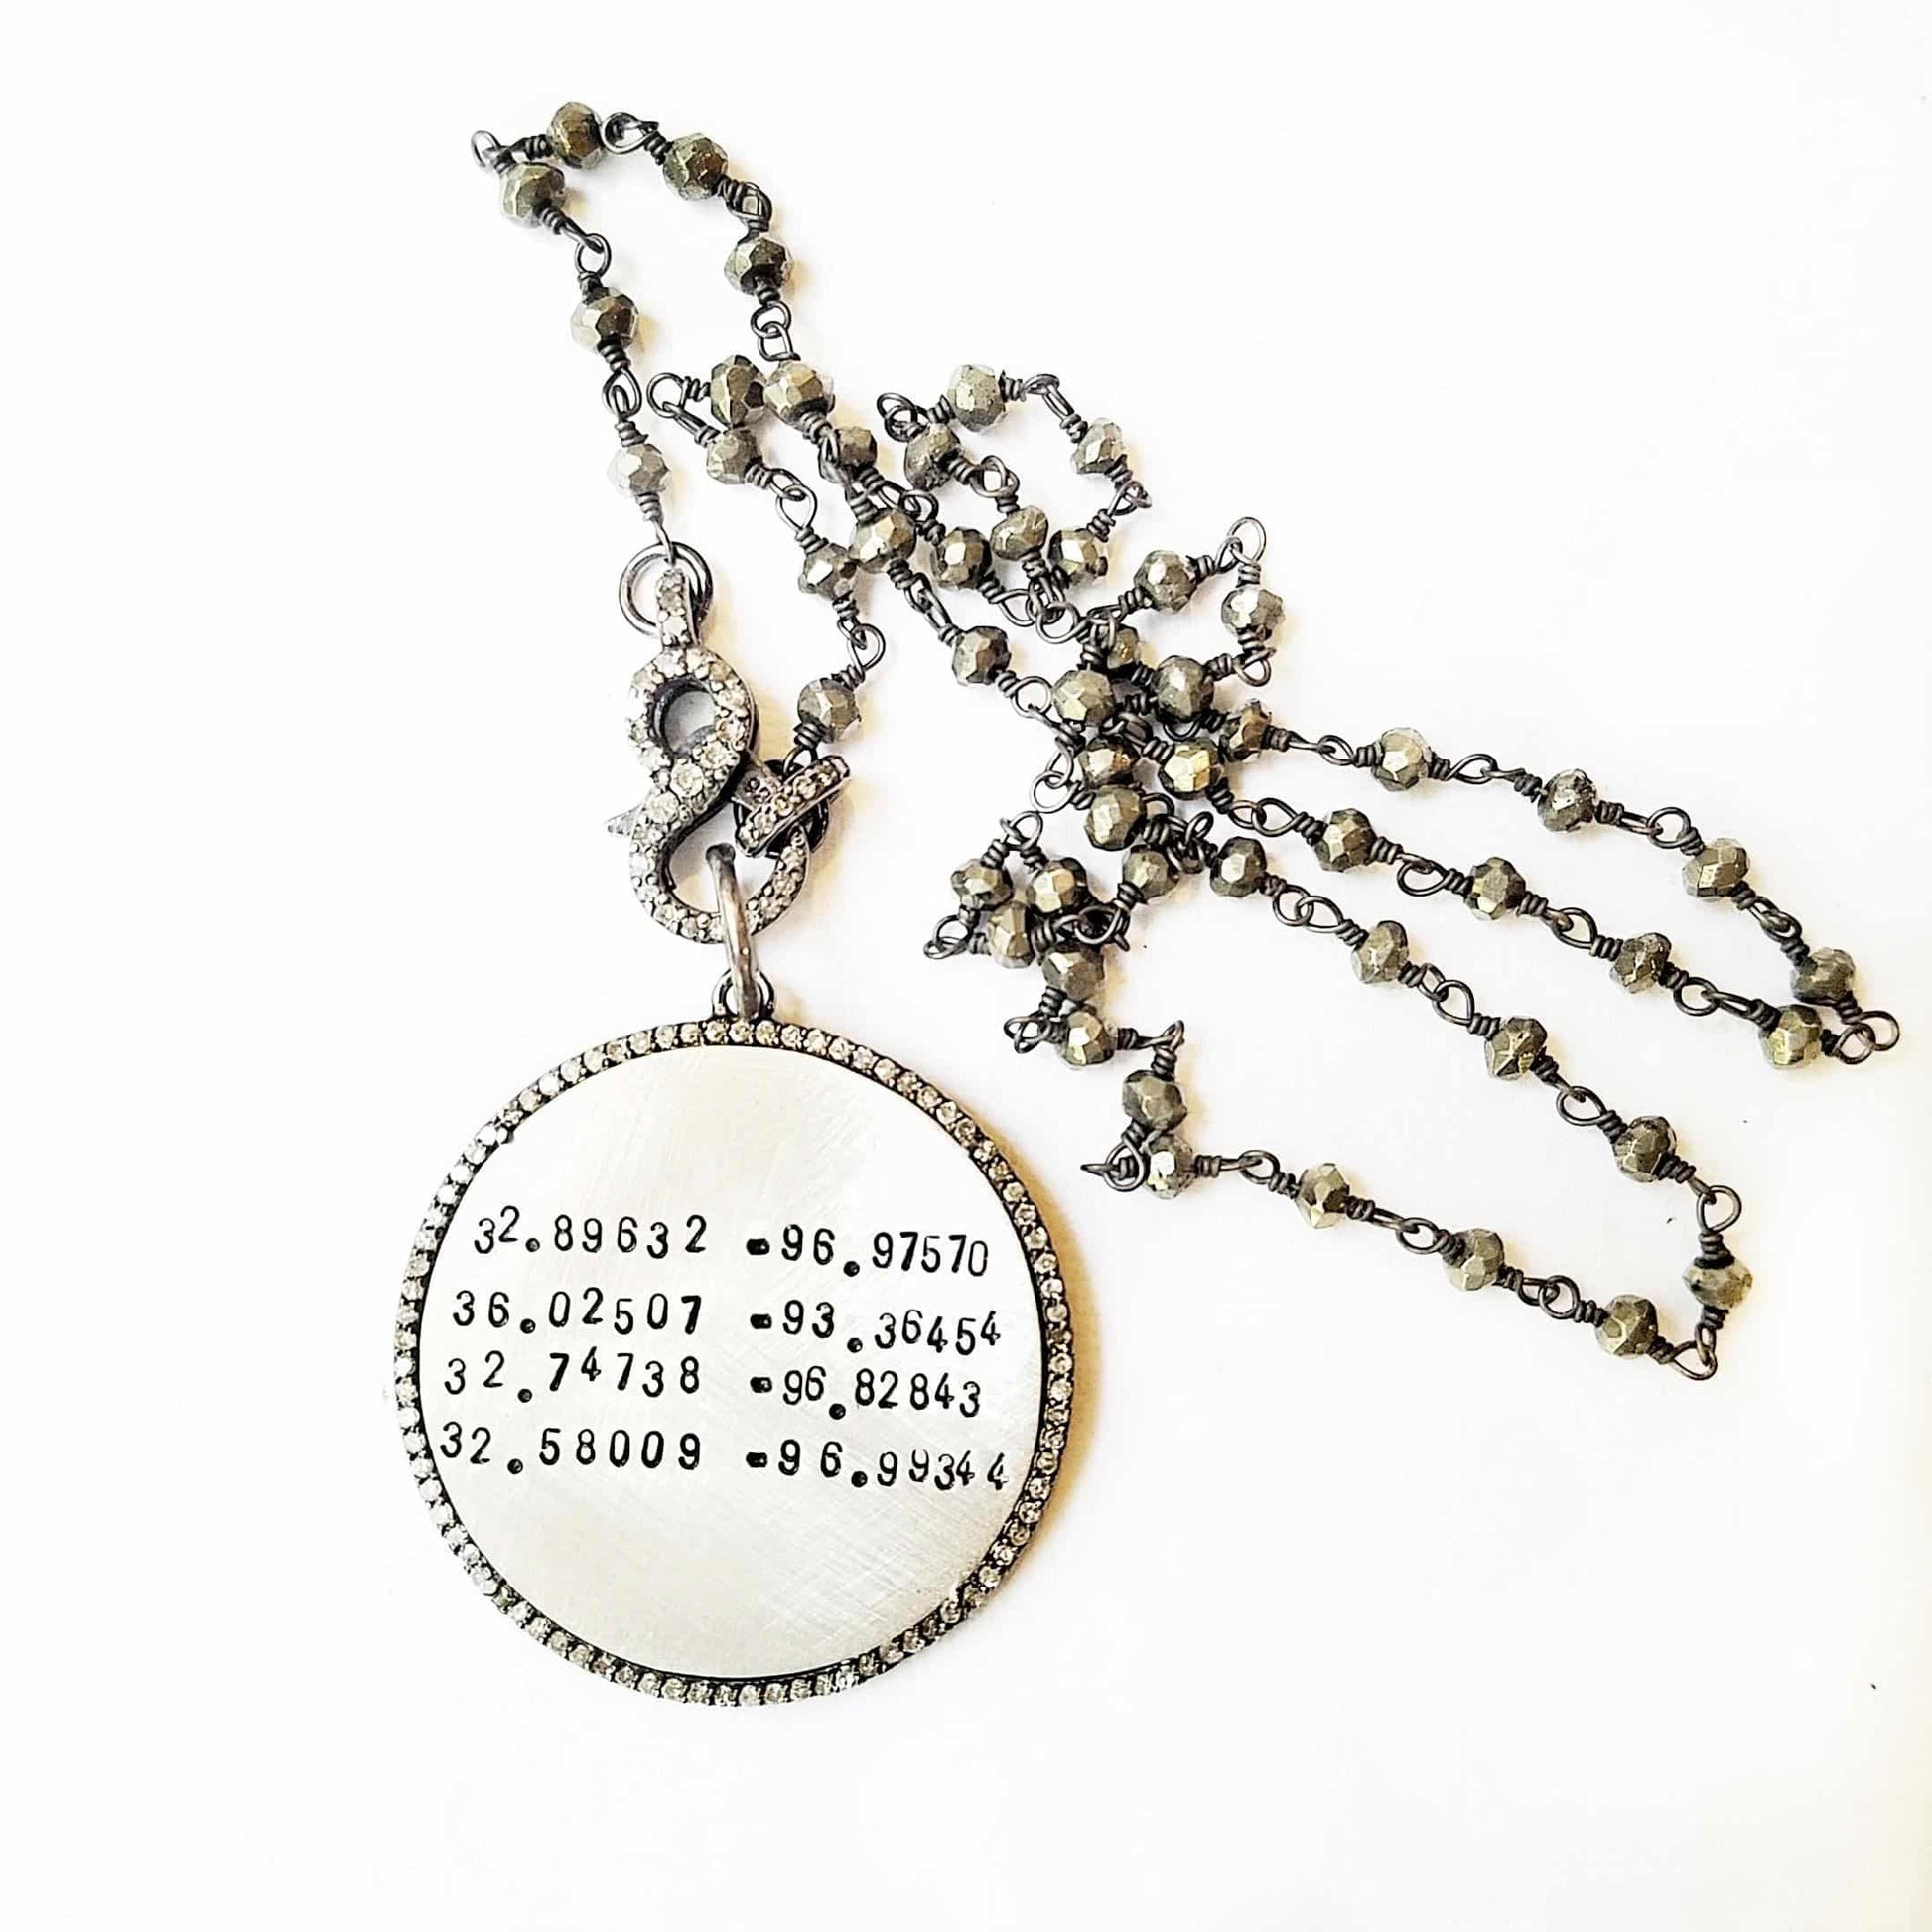 Personal messages large necklace - Michelle Rhodes